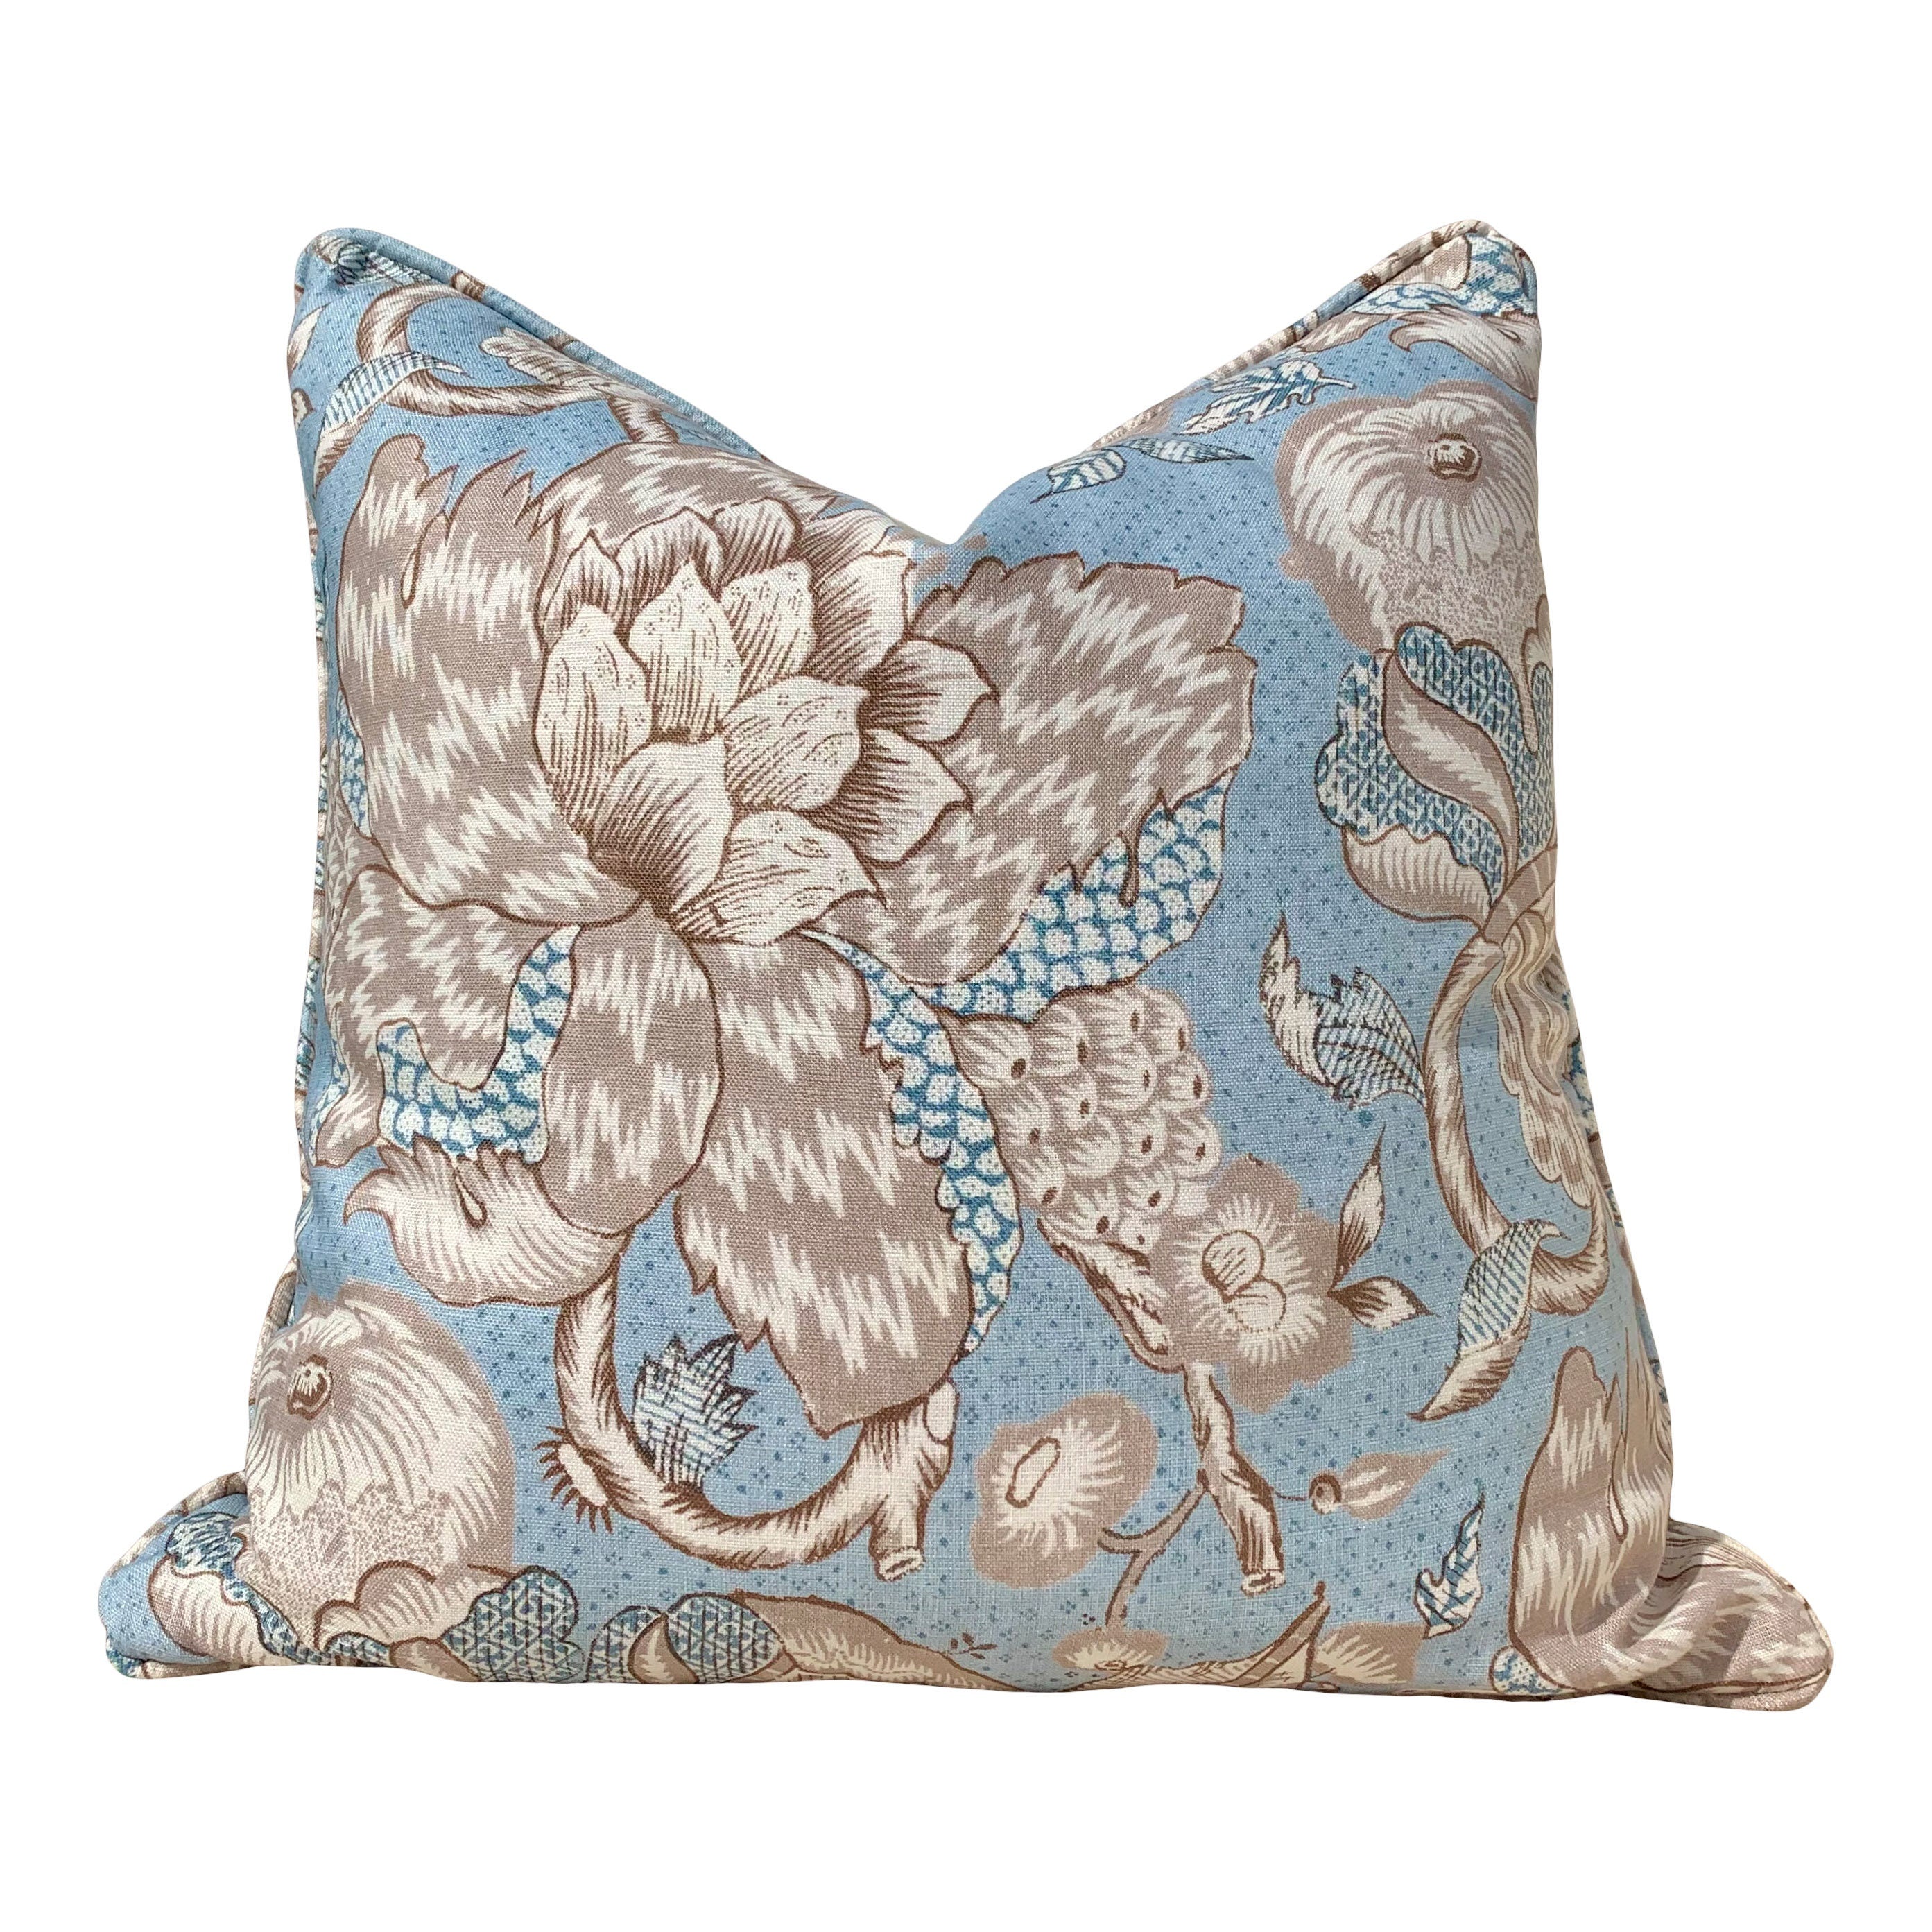 Westmont Pillow in SPA Blue. Lumbar Blue Pillow, Euro Sham Pillow, Aqua Blue Pillow, Designer Floral Throw,  Accent Cushion, Bedding Pillows